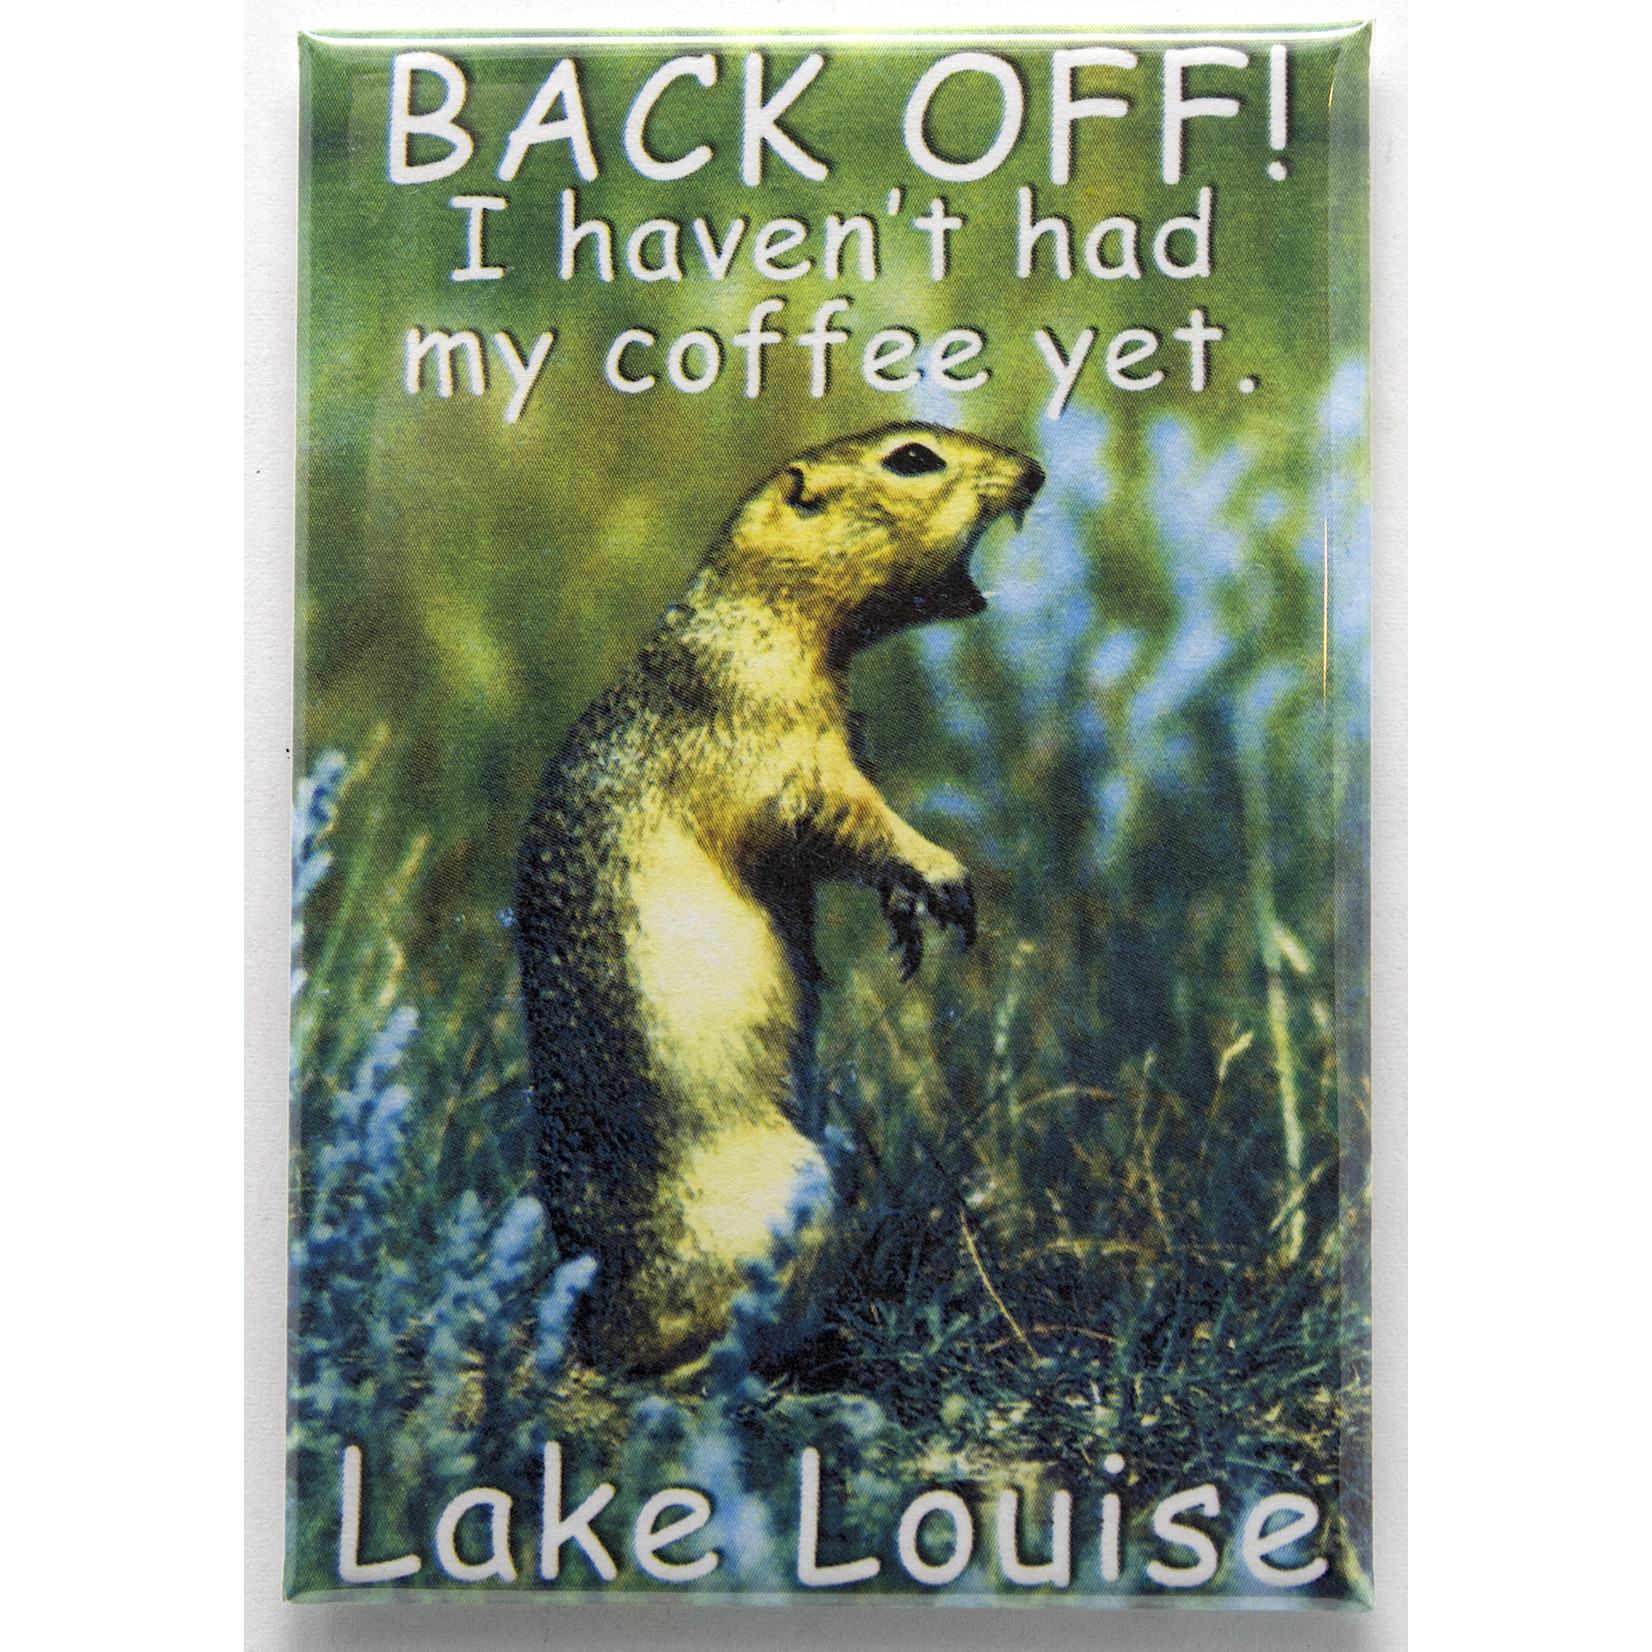 Magnet - Lake Louise, Squirrel, Back Off!